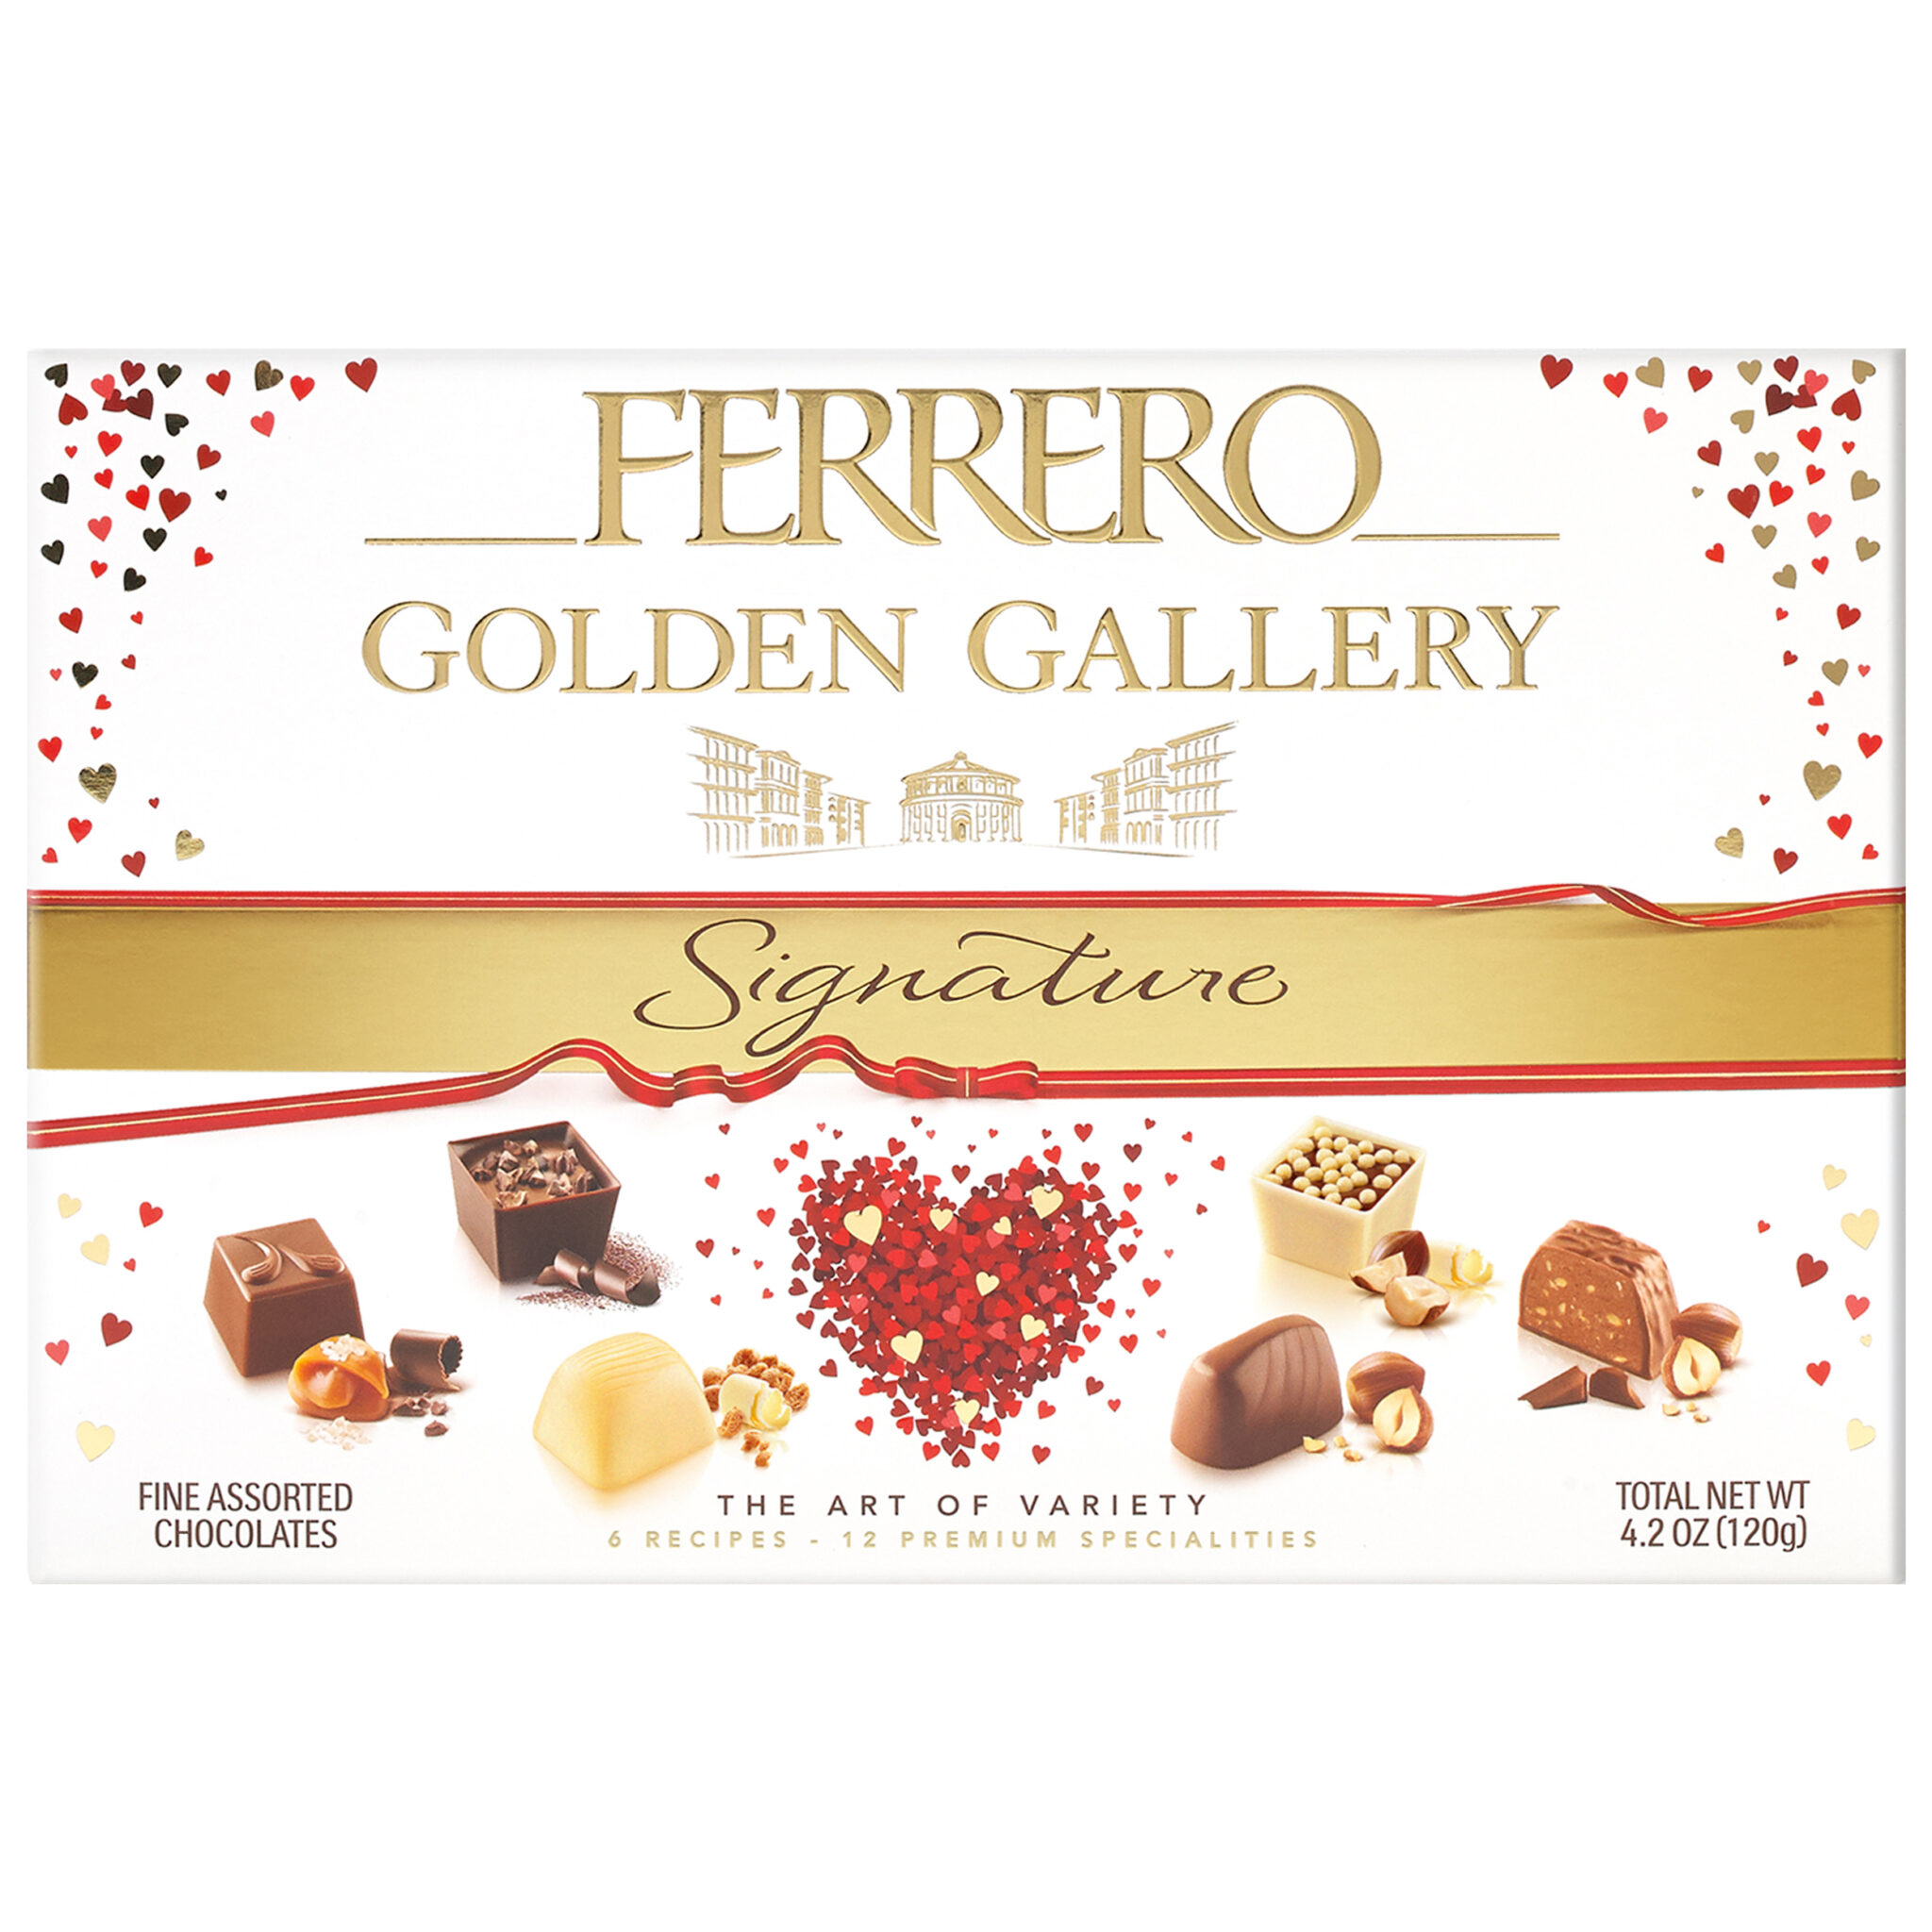 Walmart: Ferrero Golden Gallery Signature Chocolates ONLY $5.00